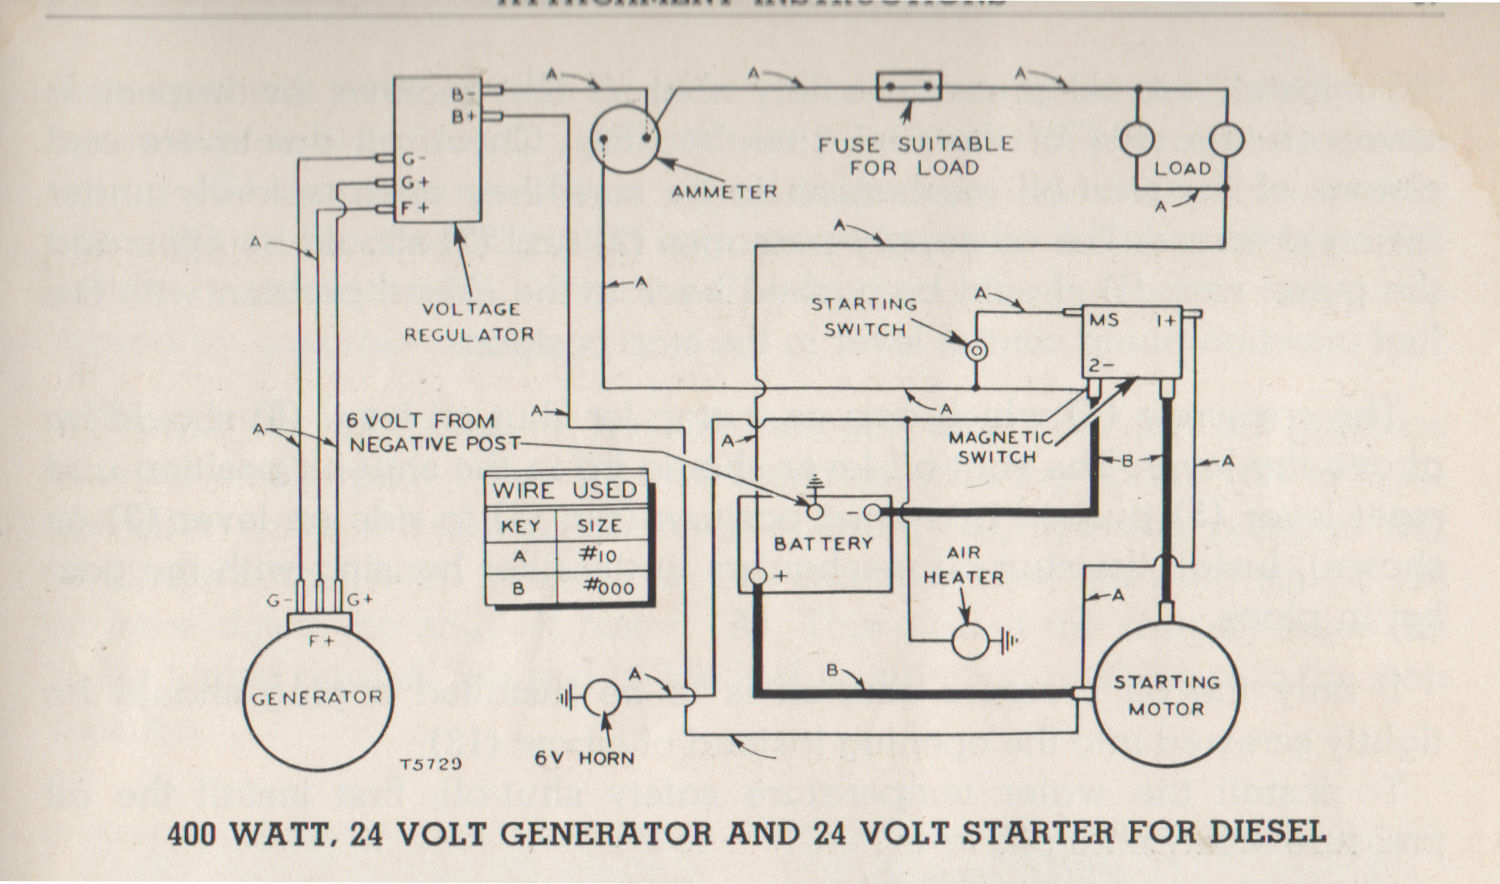 Circuit diagram. Bottom label: 400 watt. 24 volt generator and 24 volt starter for diesel.